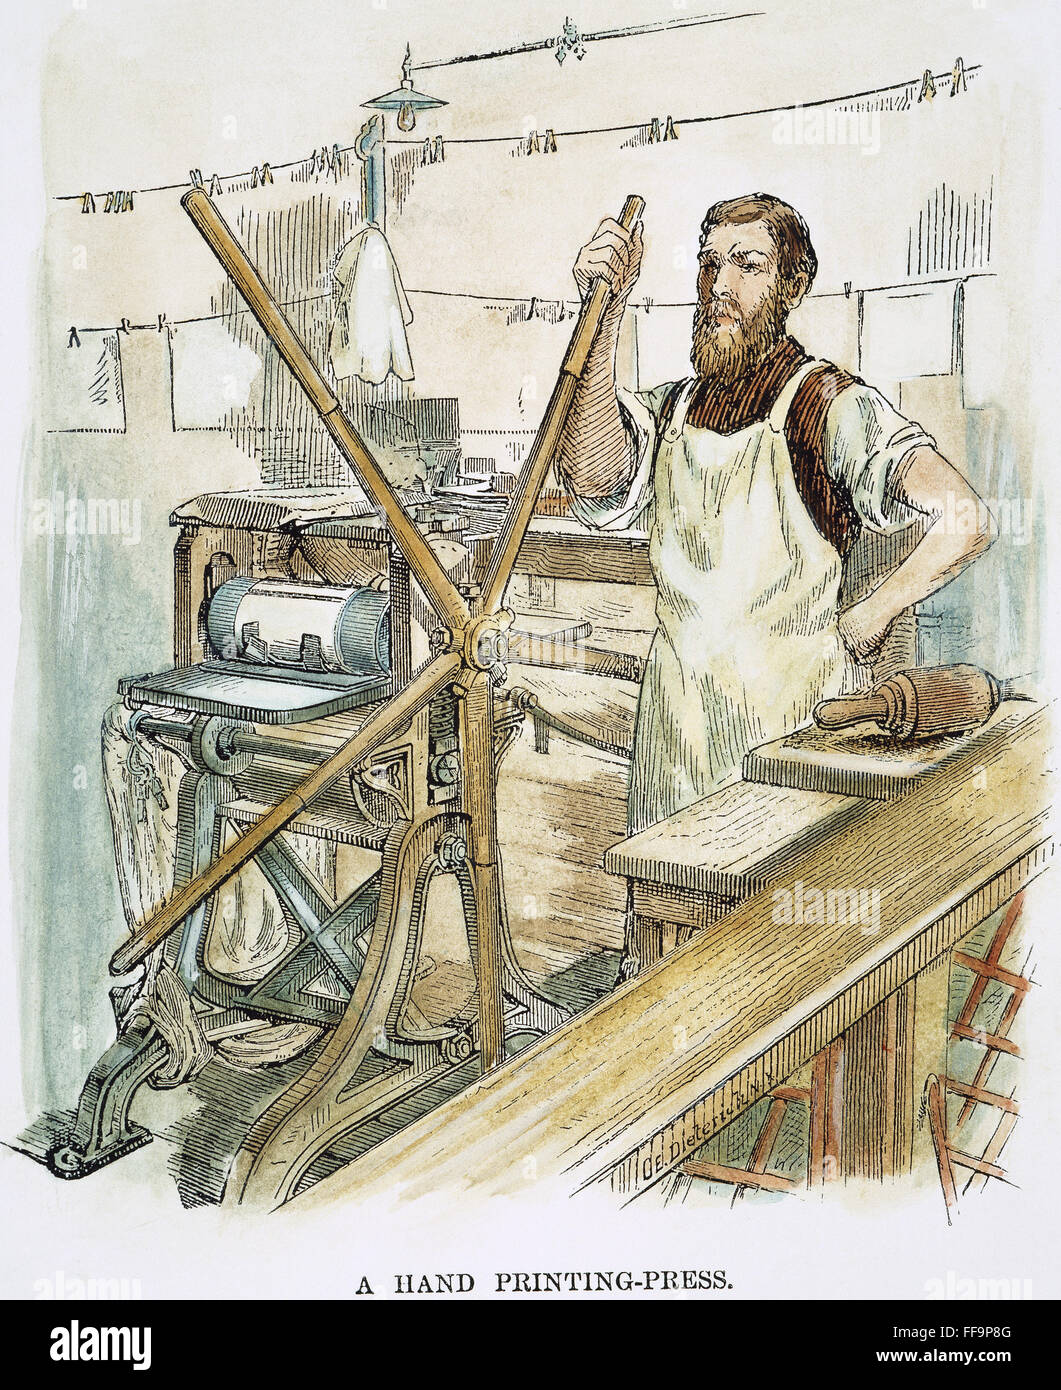 HAND PRINTING-PRESS, 1890. /nHand printing-press at the Bureau of Engraving and Printing, Washington, D.C.: line engraving, 1890. Stock Photo